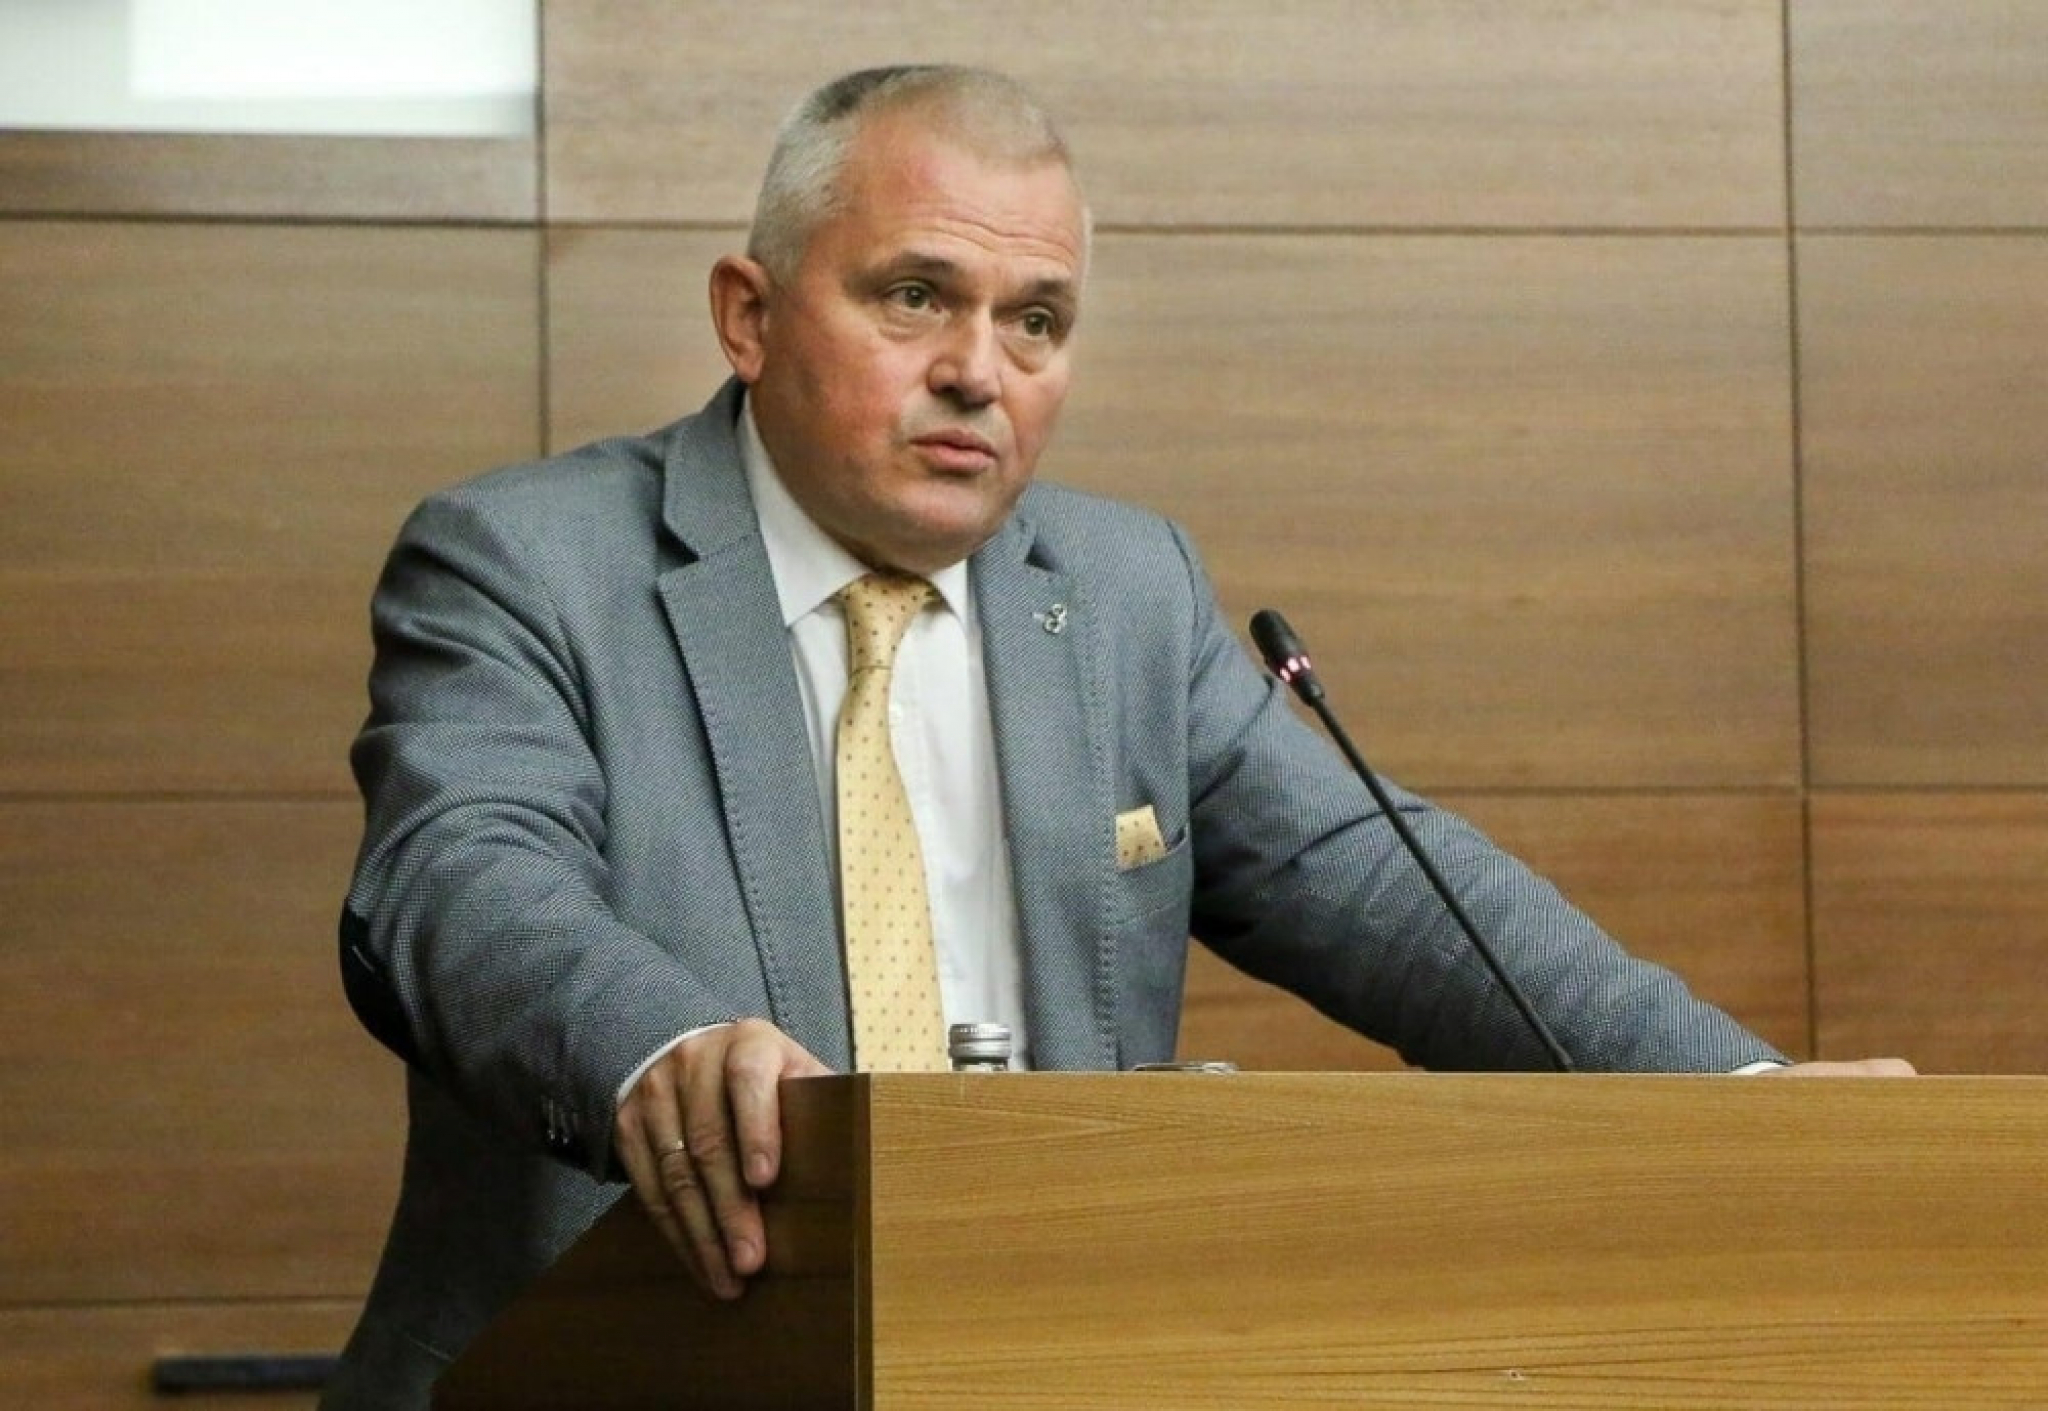 Milan Nedeljković